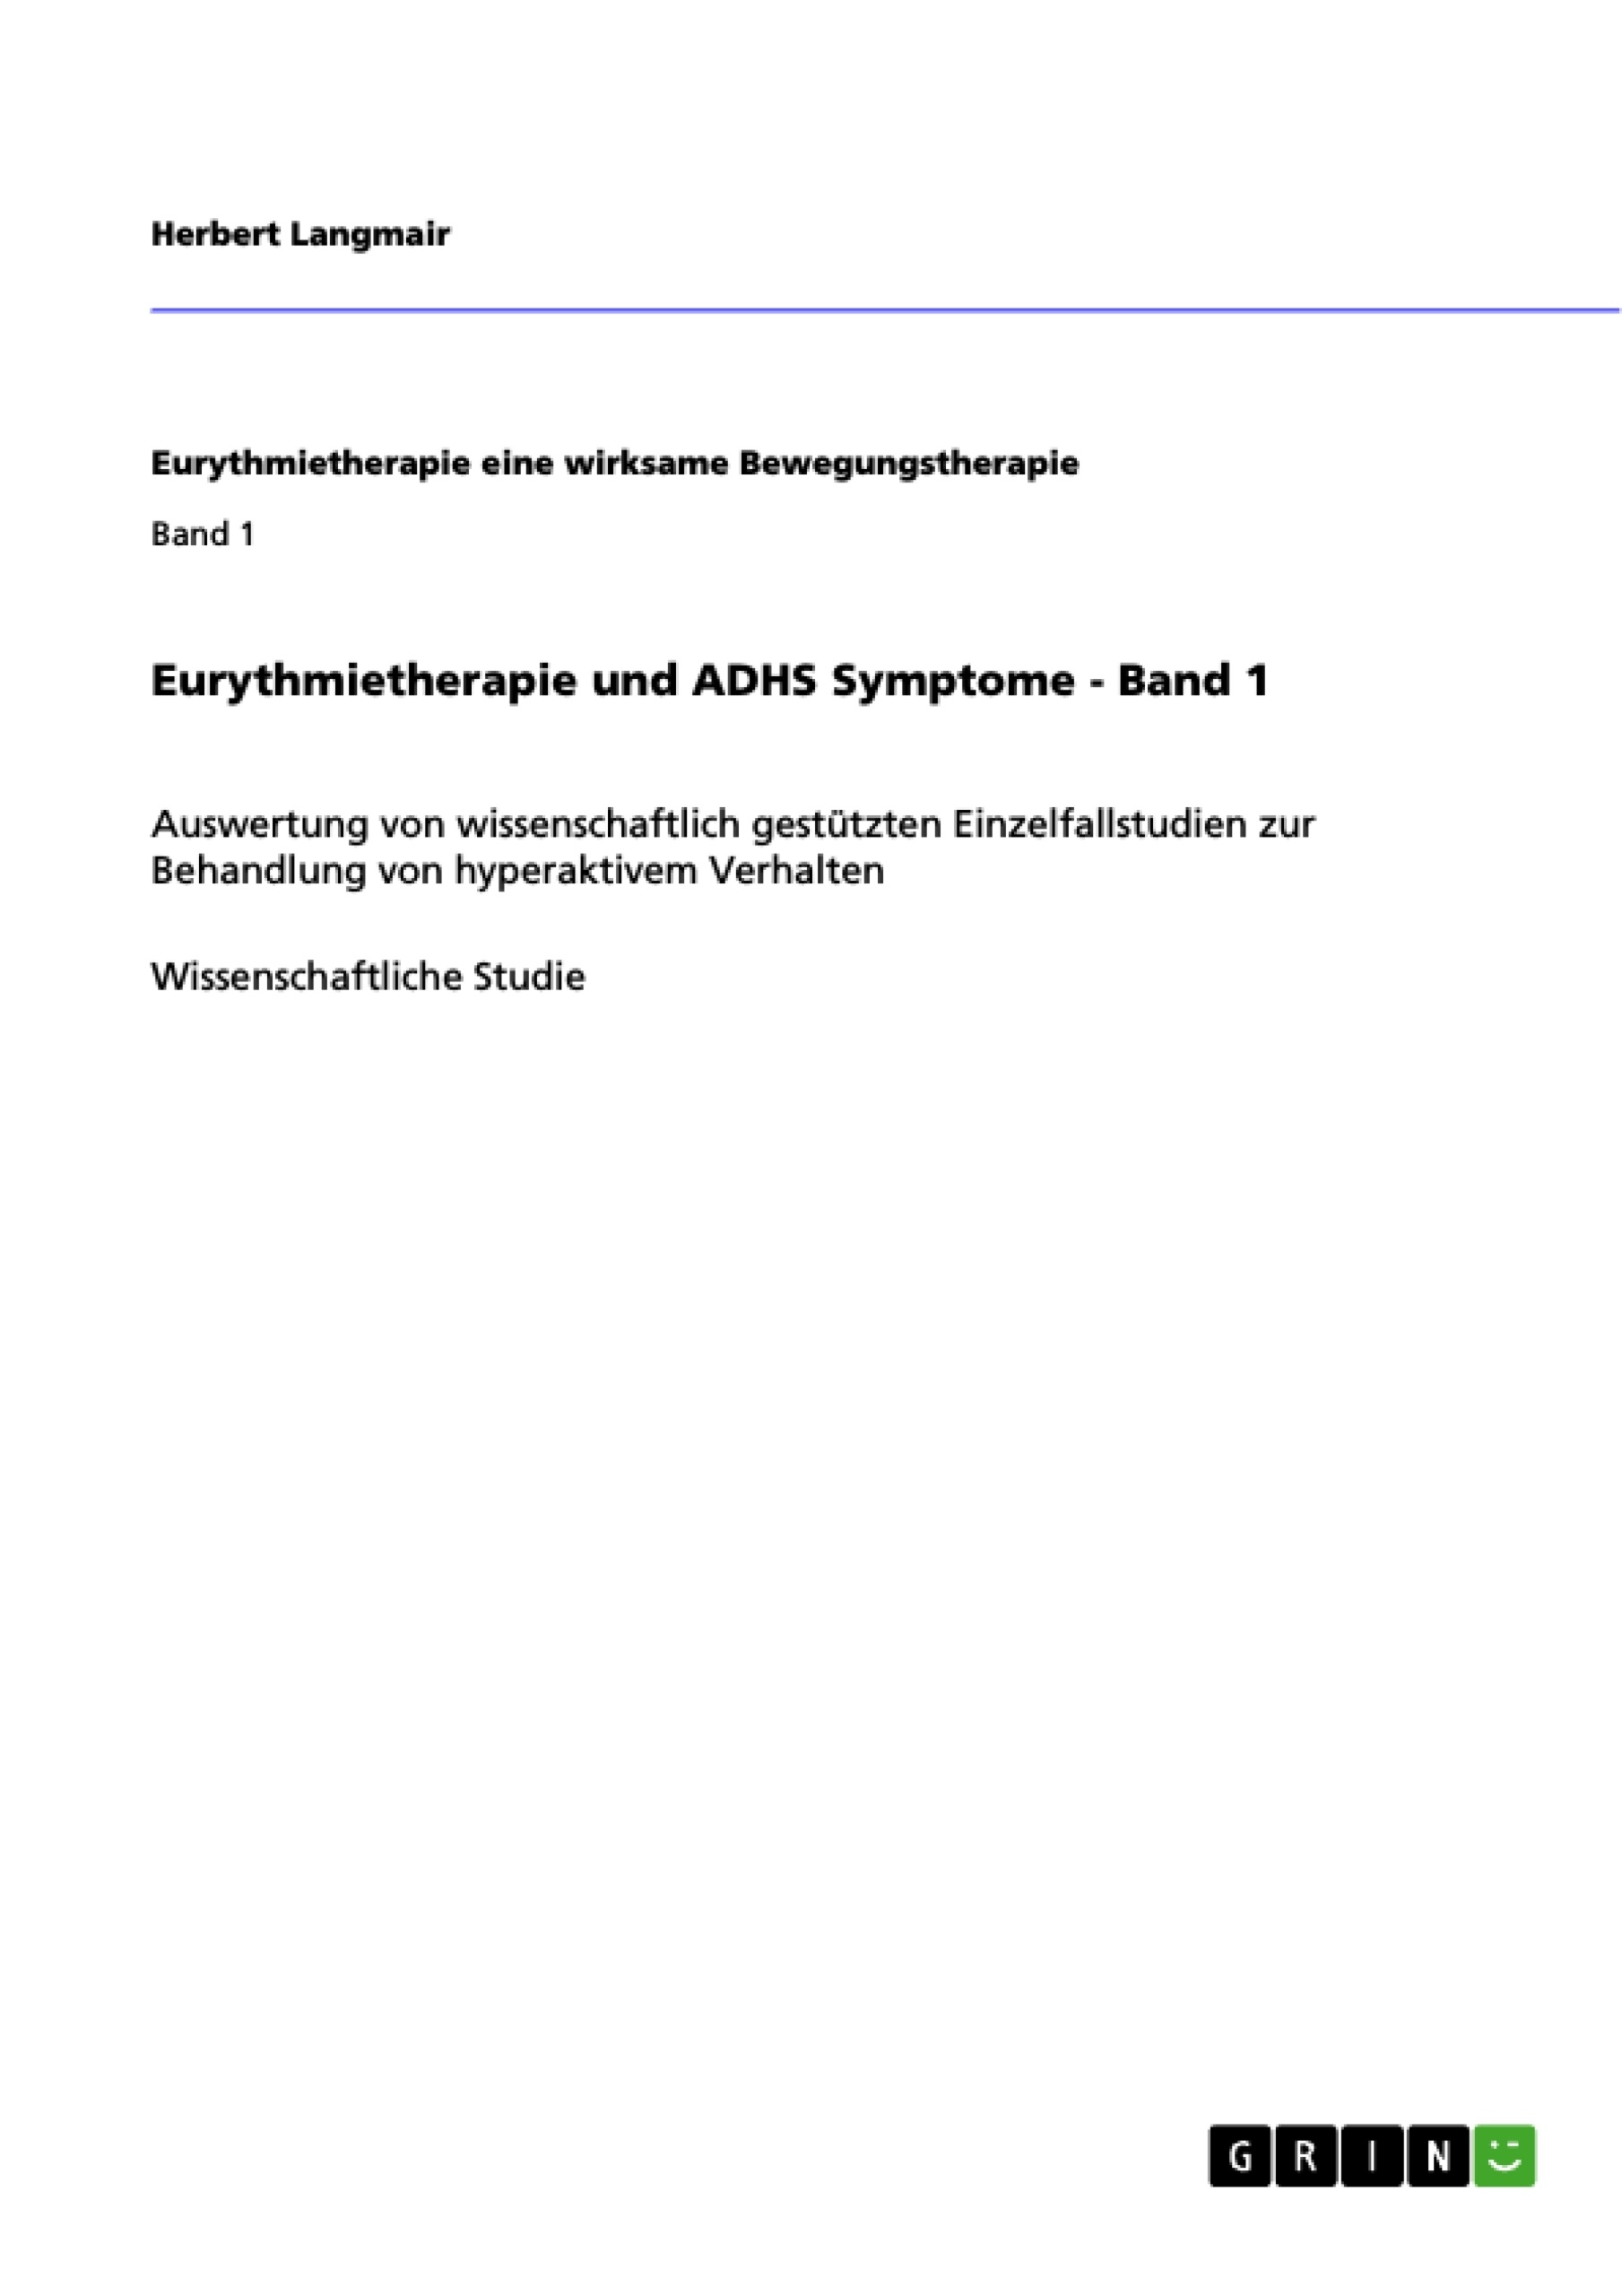 Título: Eurythmietherapie und ADHS Symptome - Band 1